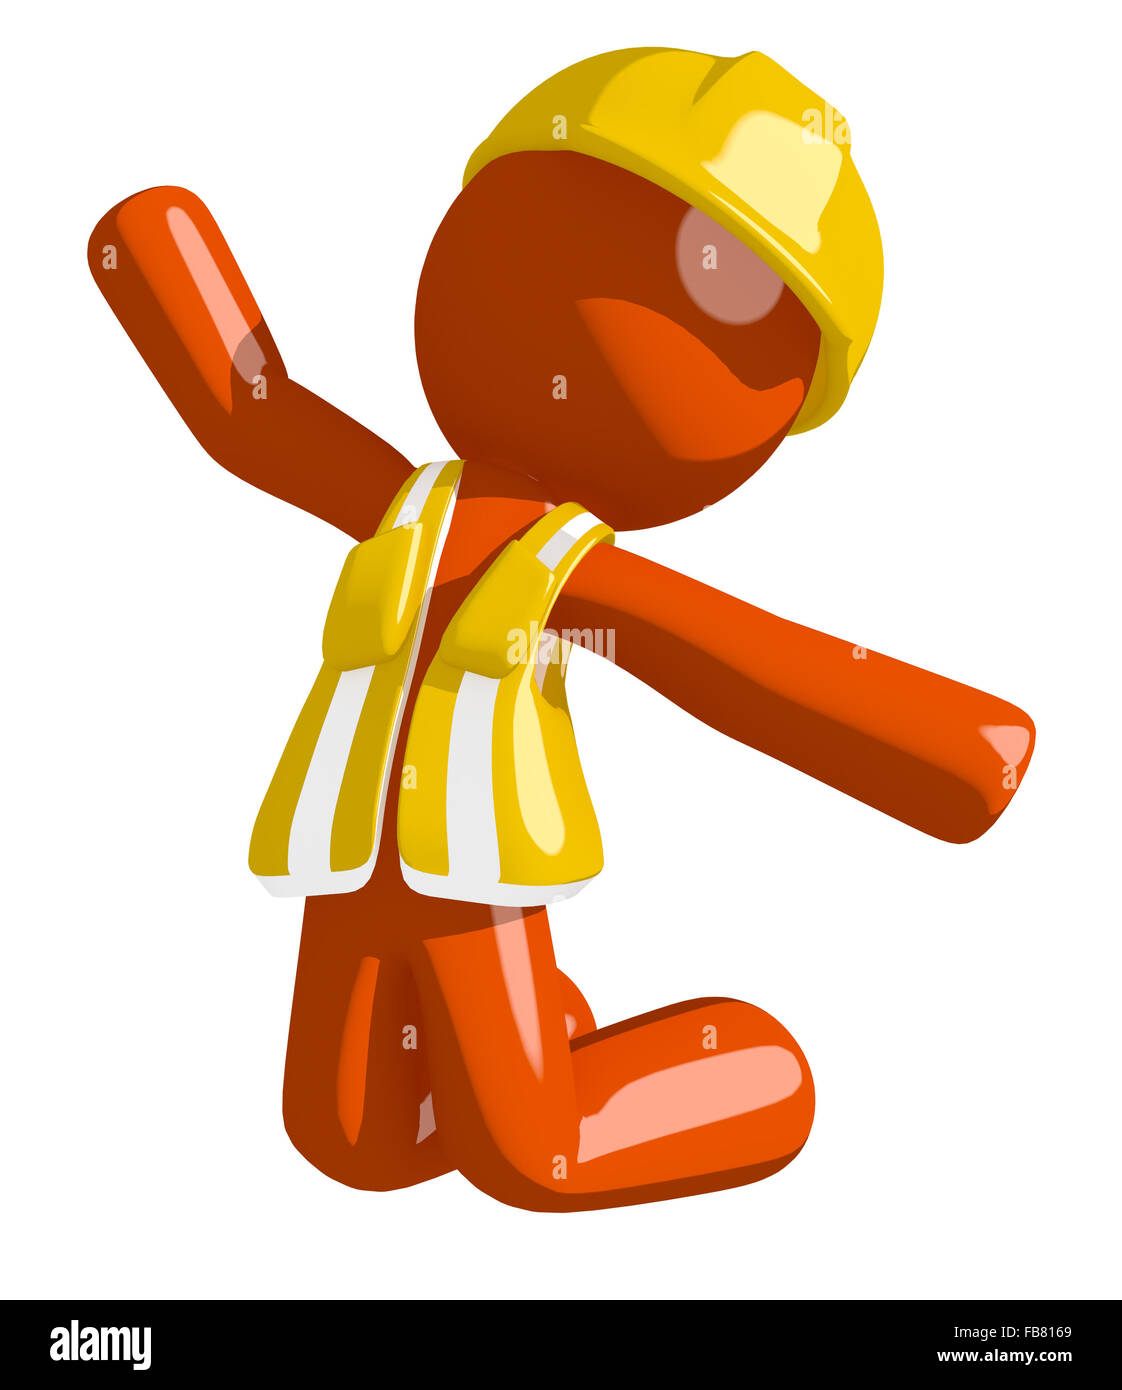 Orange man construction worker  jumping or kneeling. Stock Photo